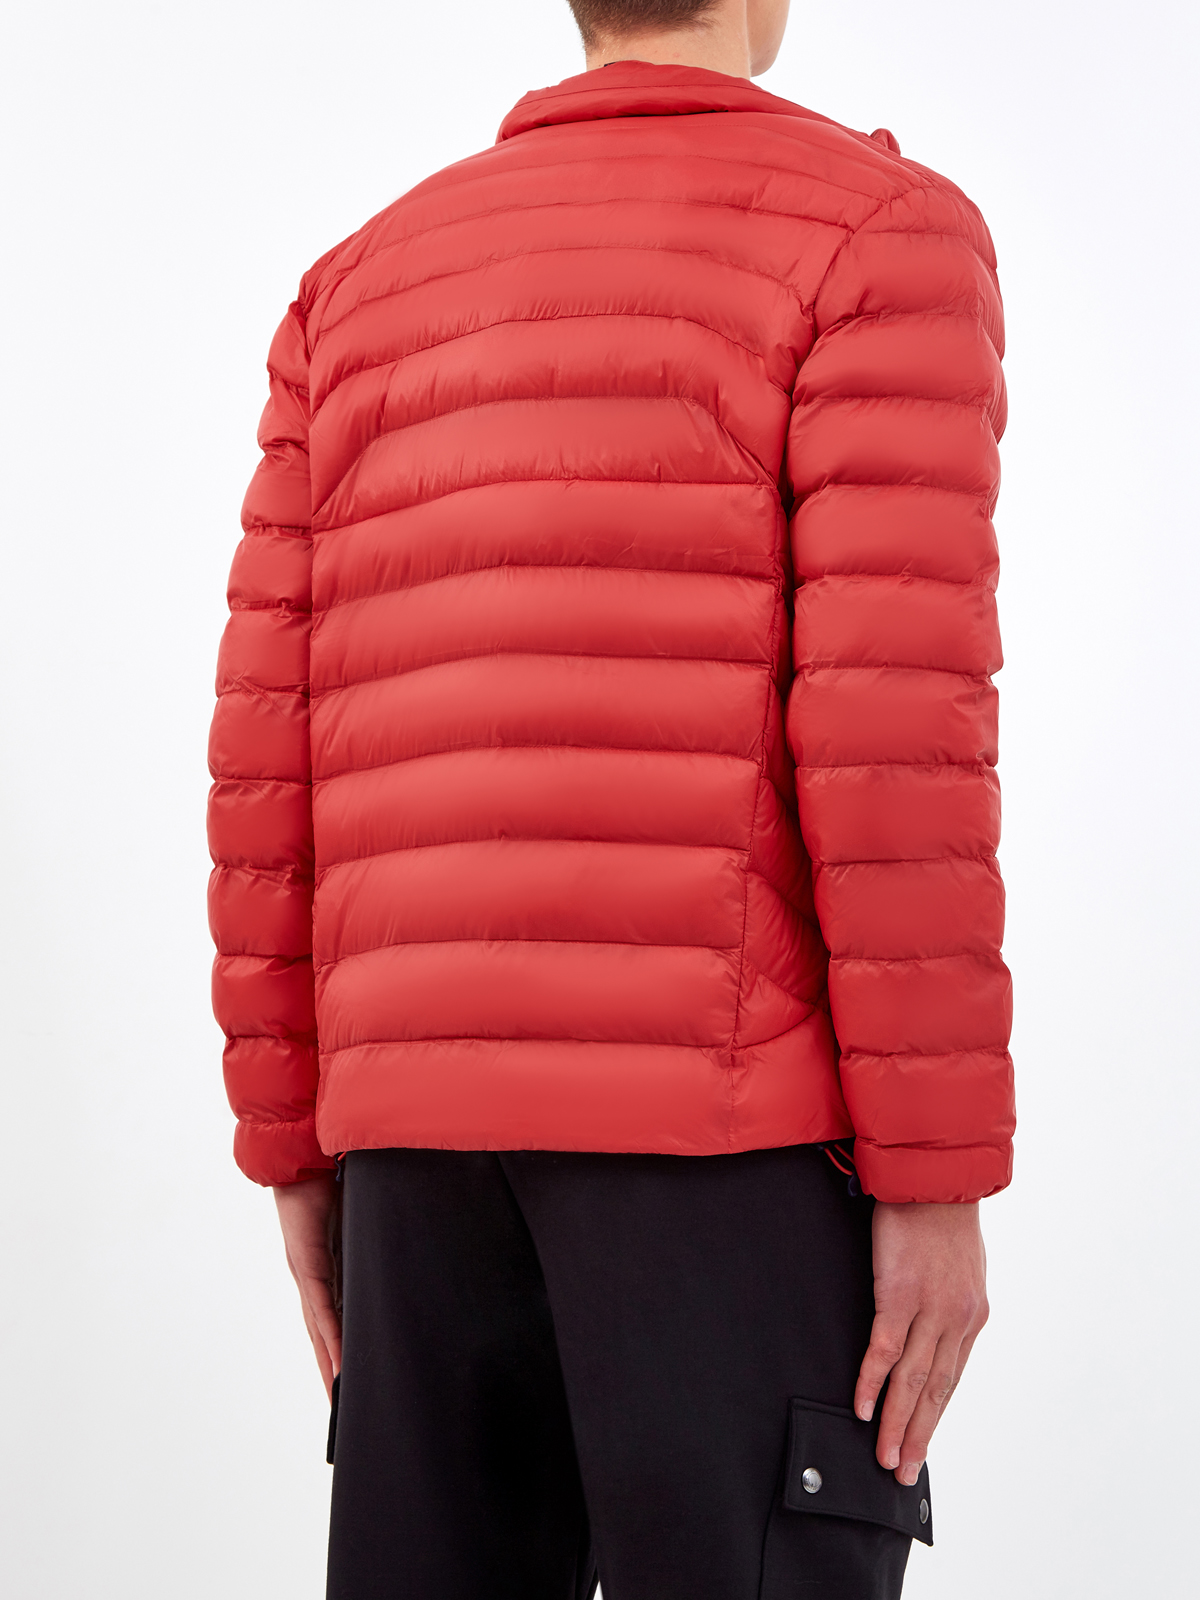 Компактная куртка из нейлона PrimaLoft® ThermoPlume™ POLO RALPH LAUREN, цвет красный, размер L;M;S - фото 4